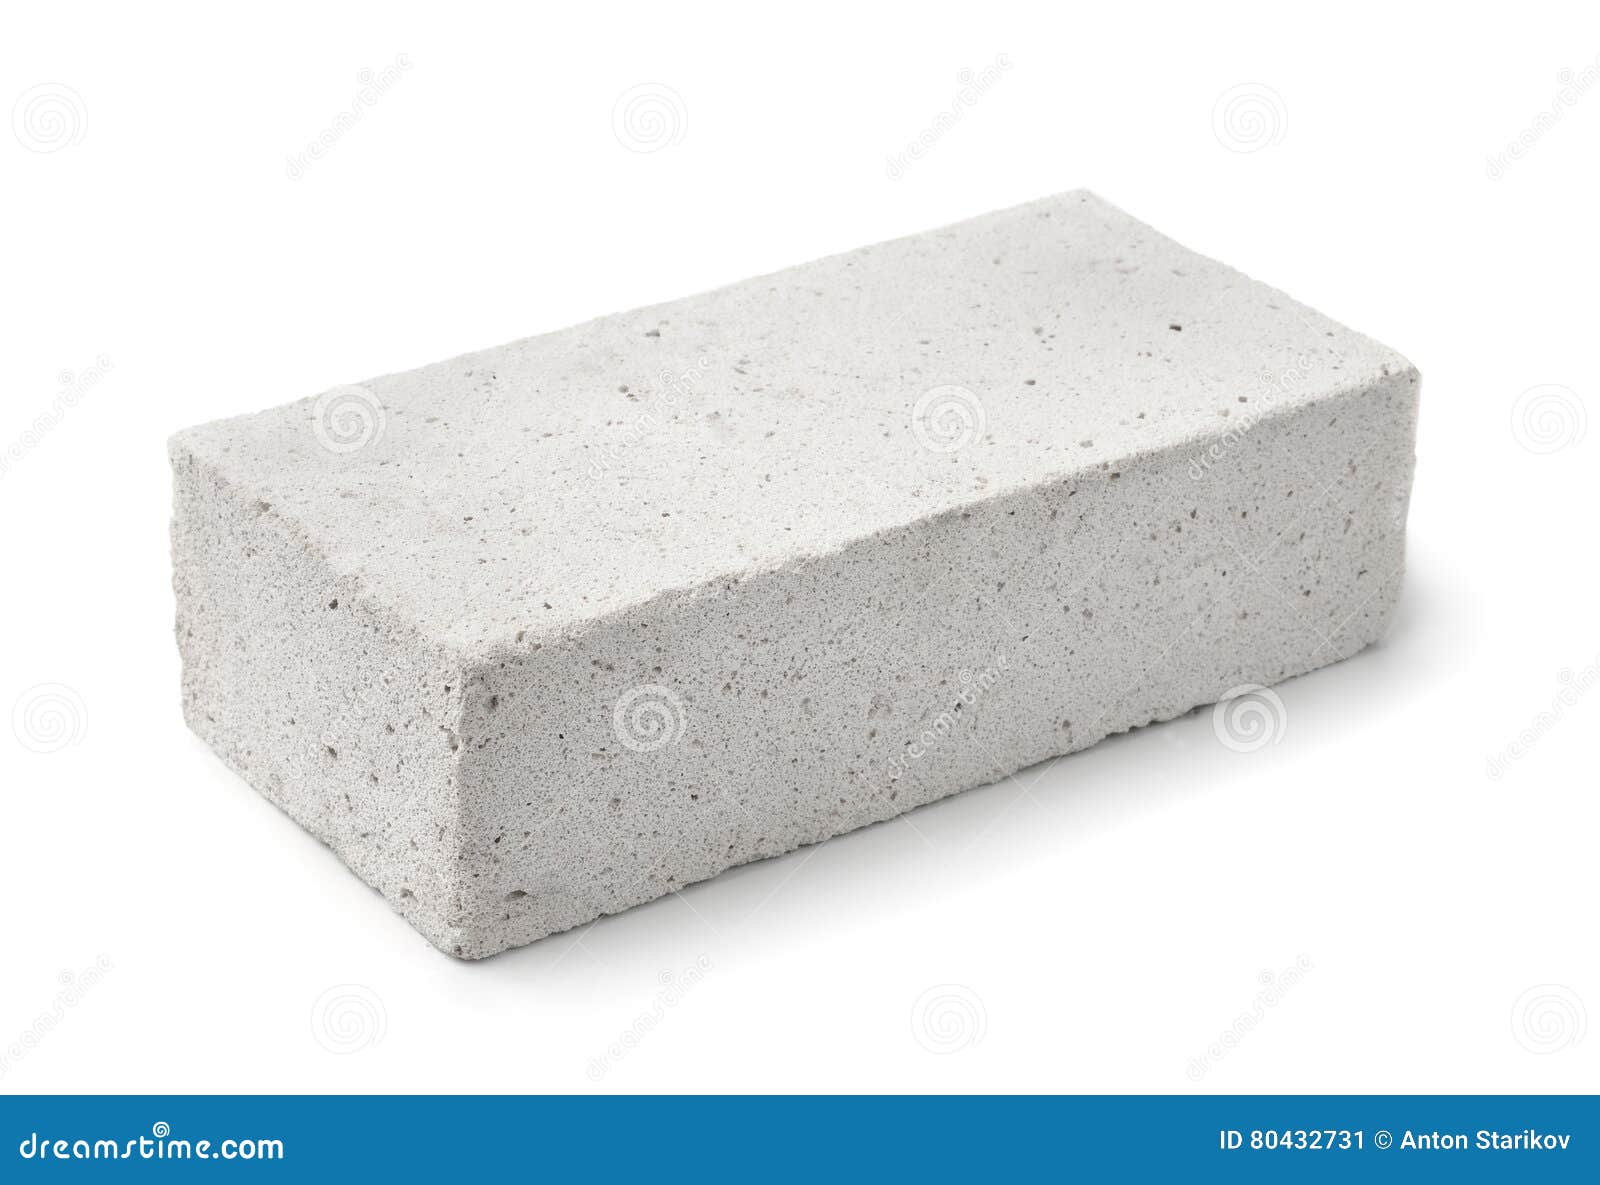 lightweight foamed gypsum block